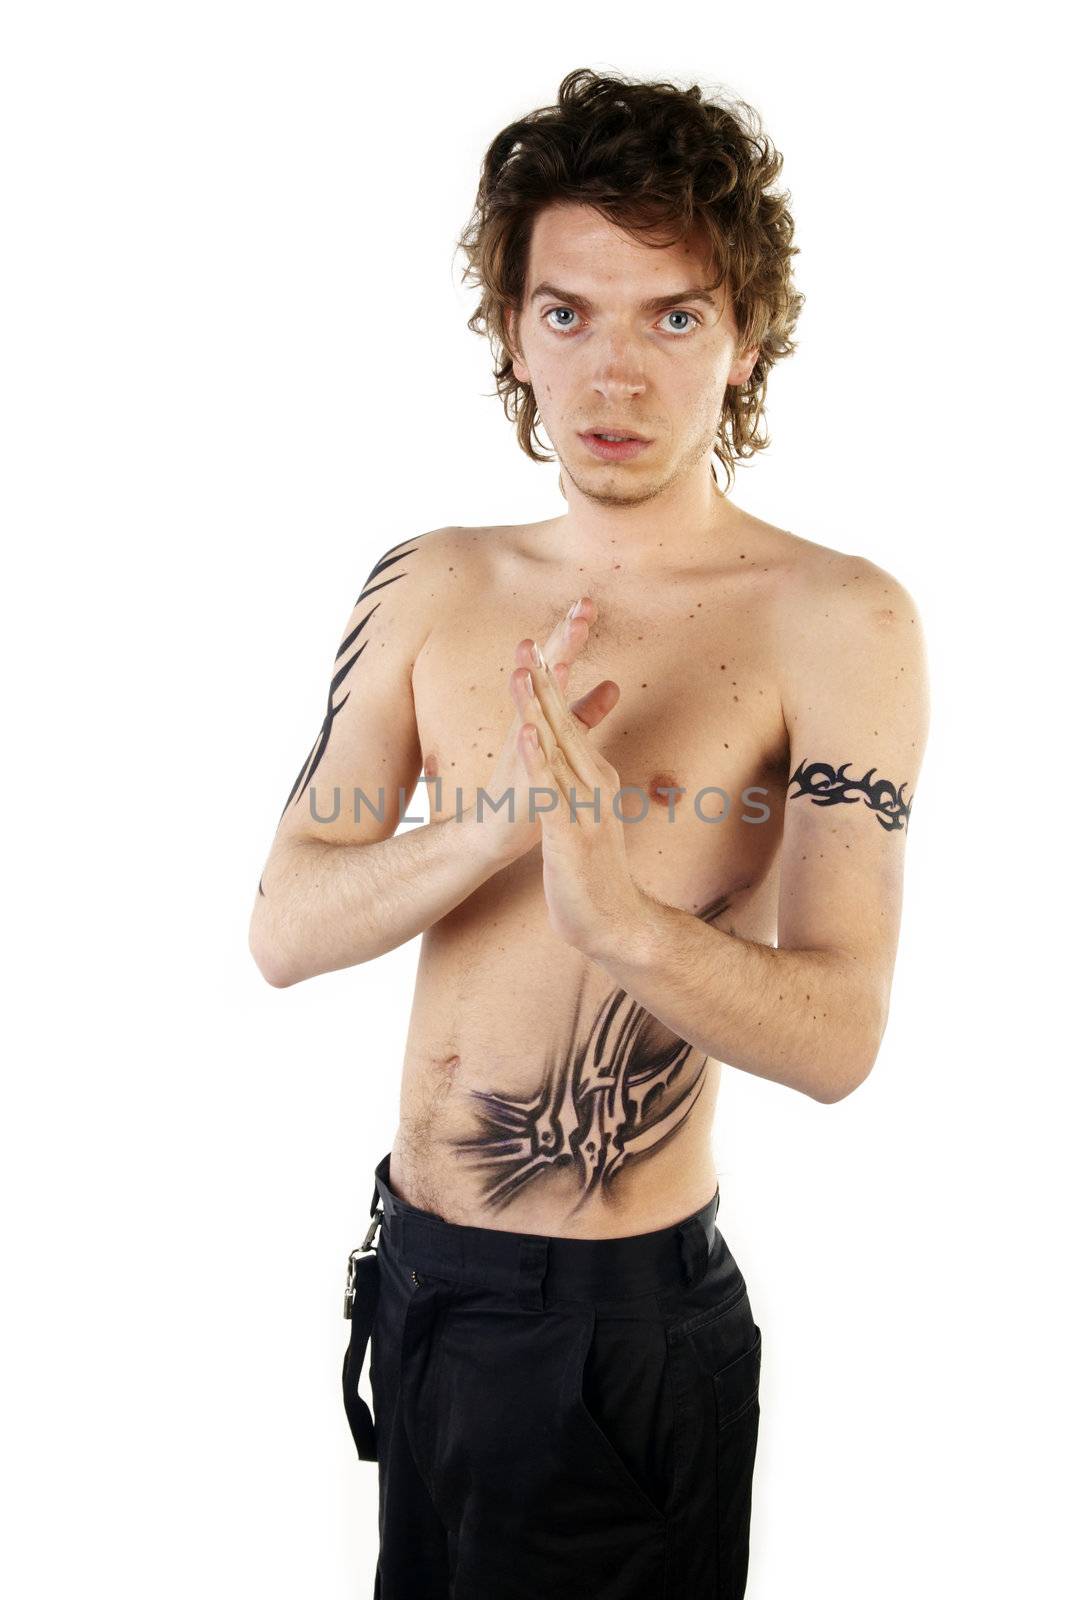 Man with tattoos posing